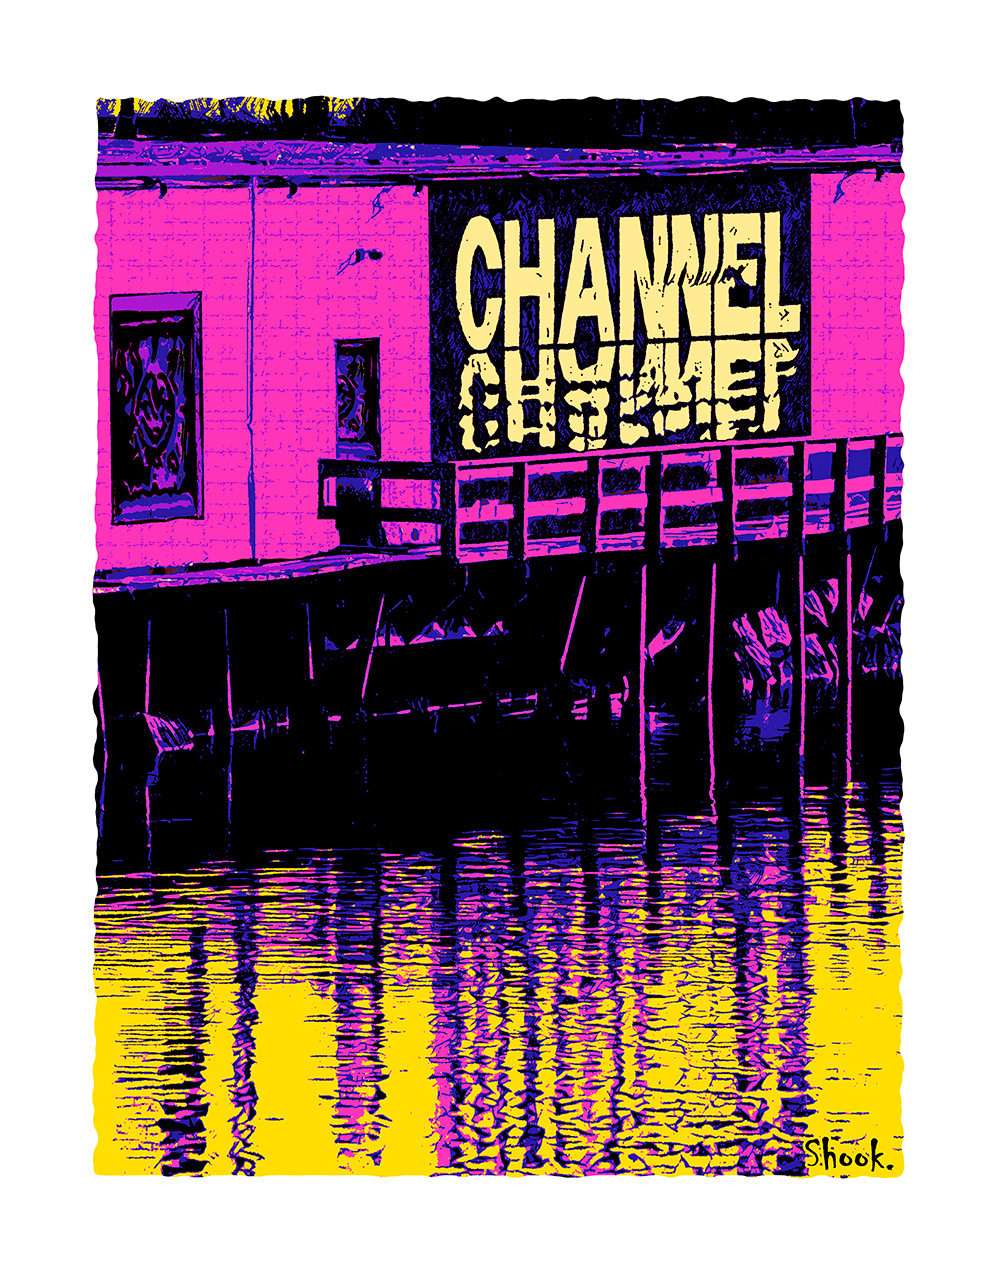 The Channel Boston Art Print (Multi-size options)